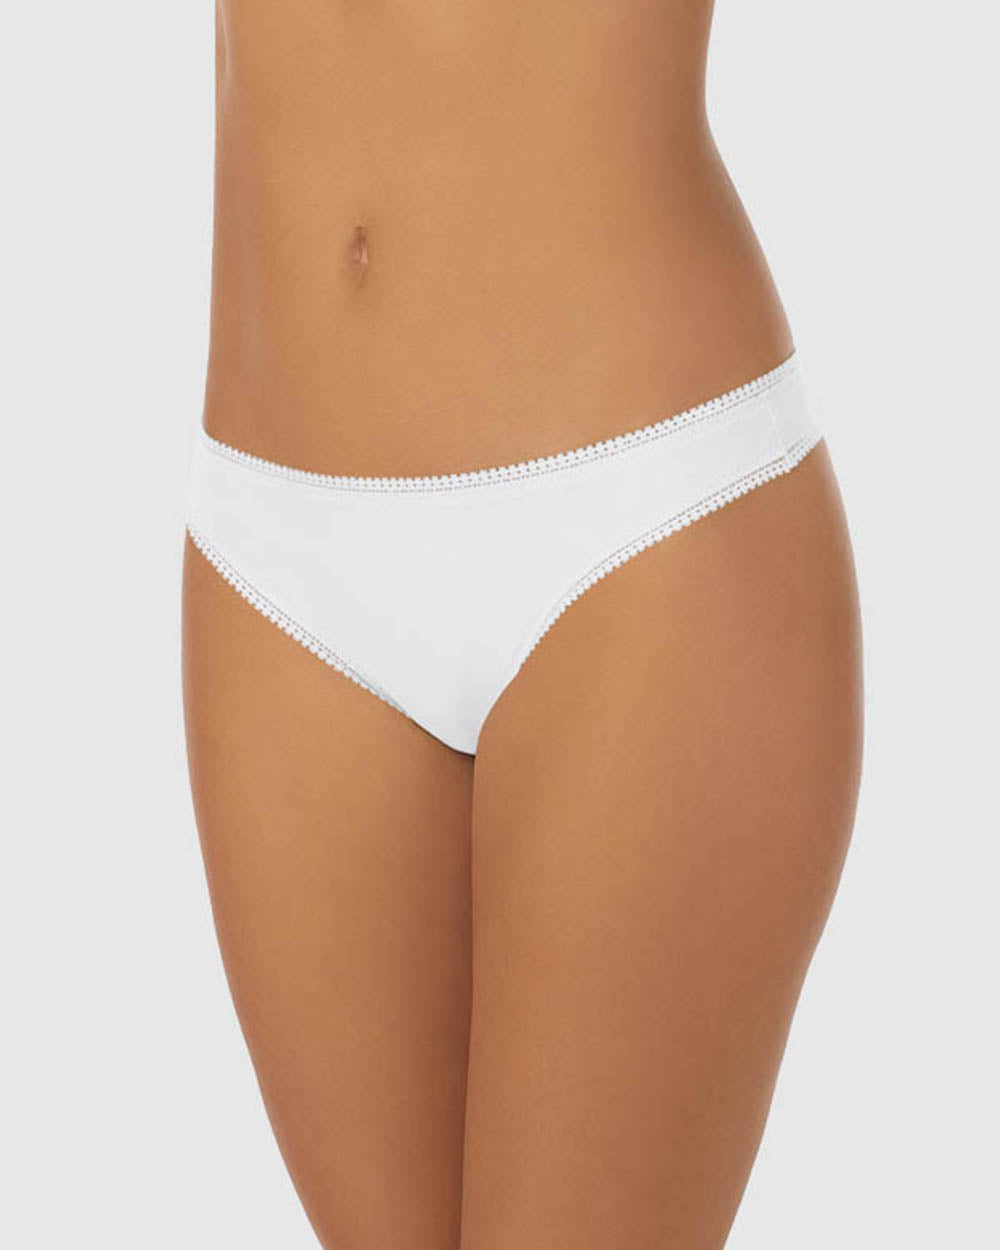 A lady wearing White Cabana Cotton Hip G Thong Underwear